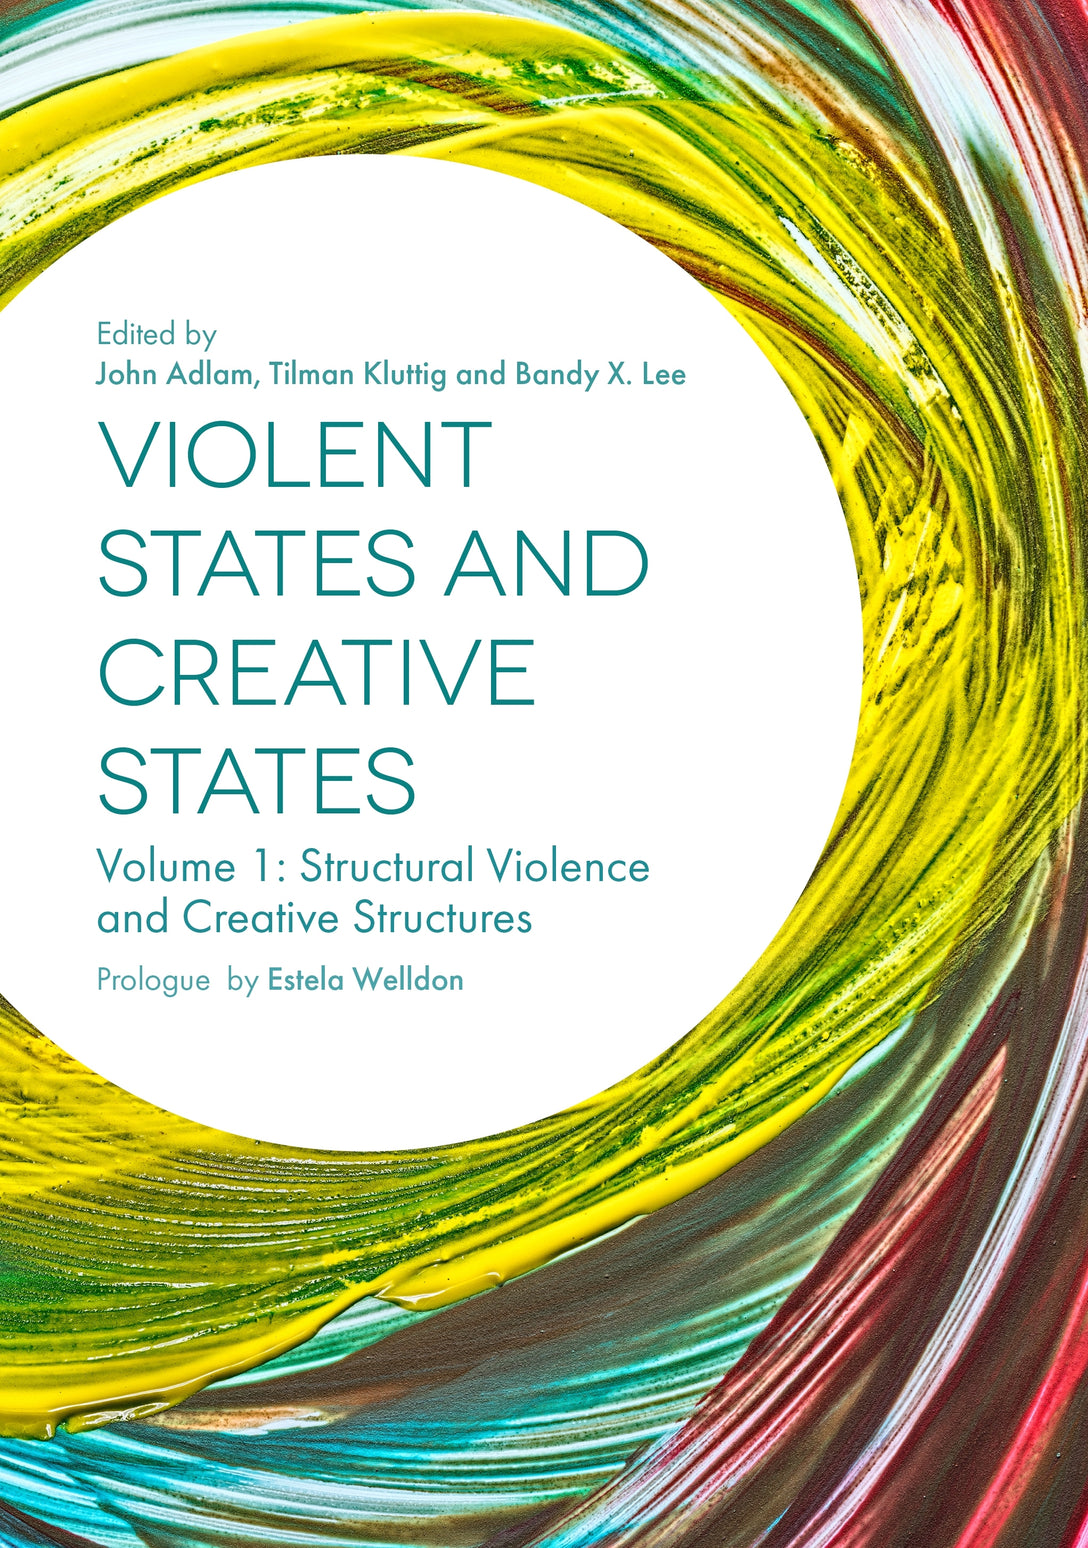 Violent States and Creative States (Volume 1) by Tilman Kluttig, Bandy Lee, John Adlam